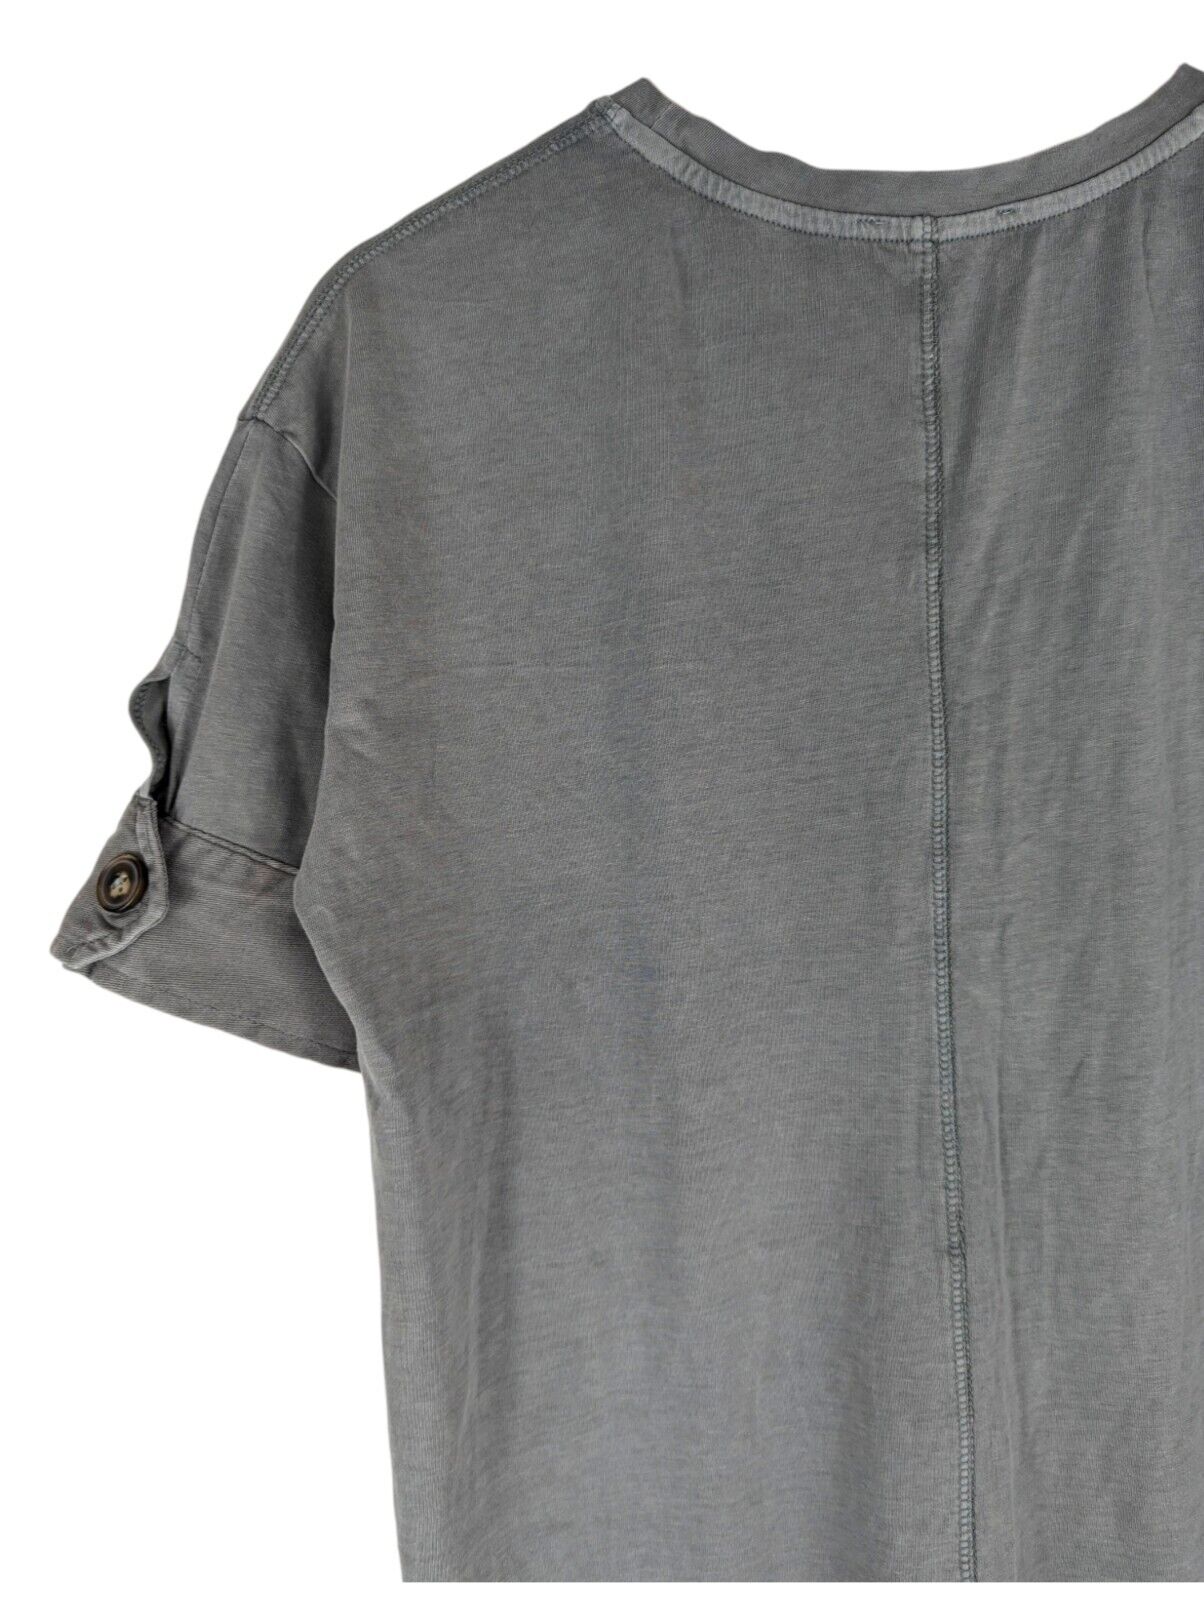 Zara Grey T-shirt Dress, Cotton Casual Short Slee… - image 7